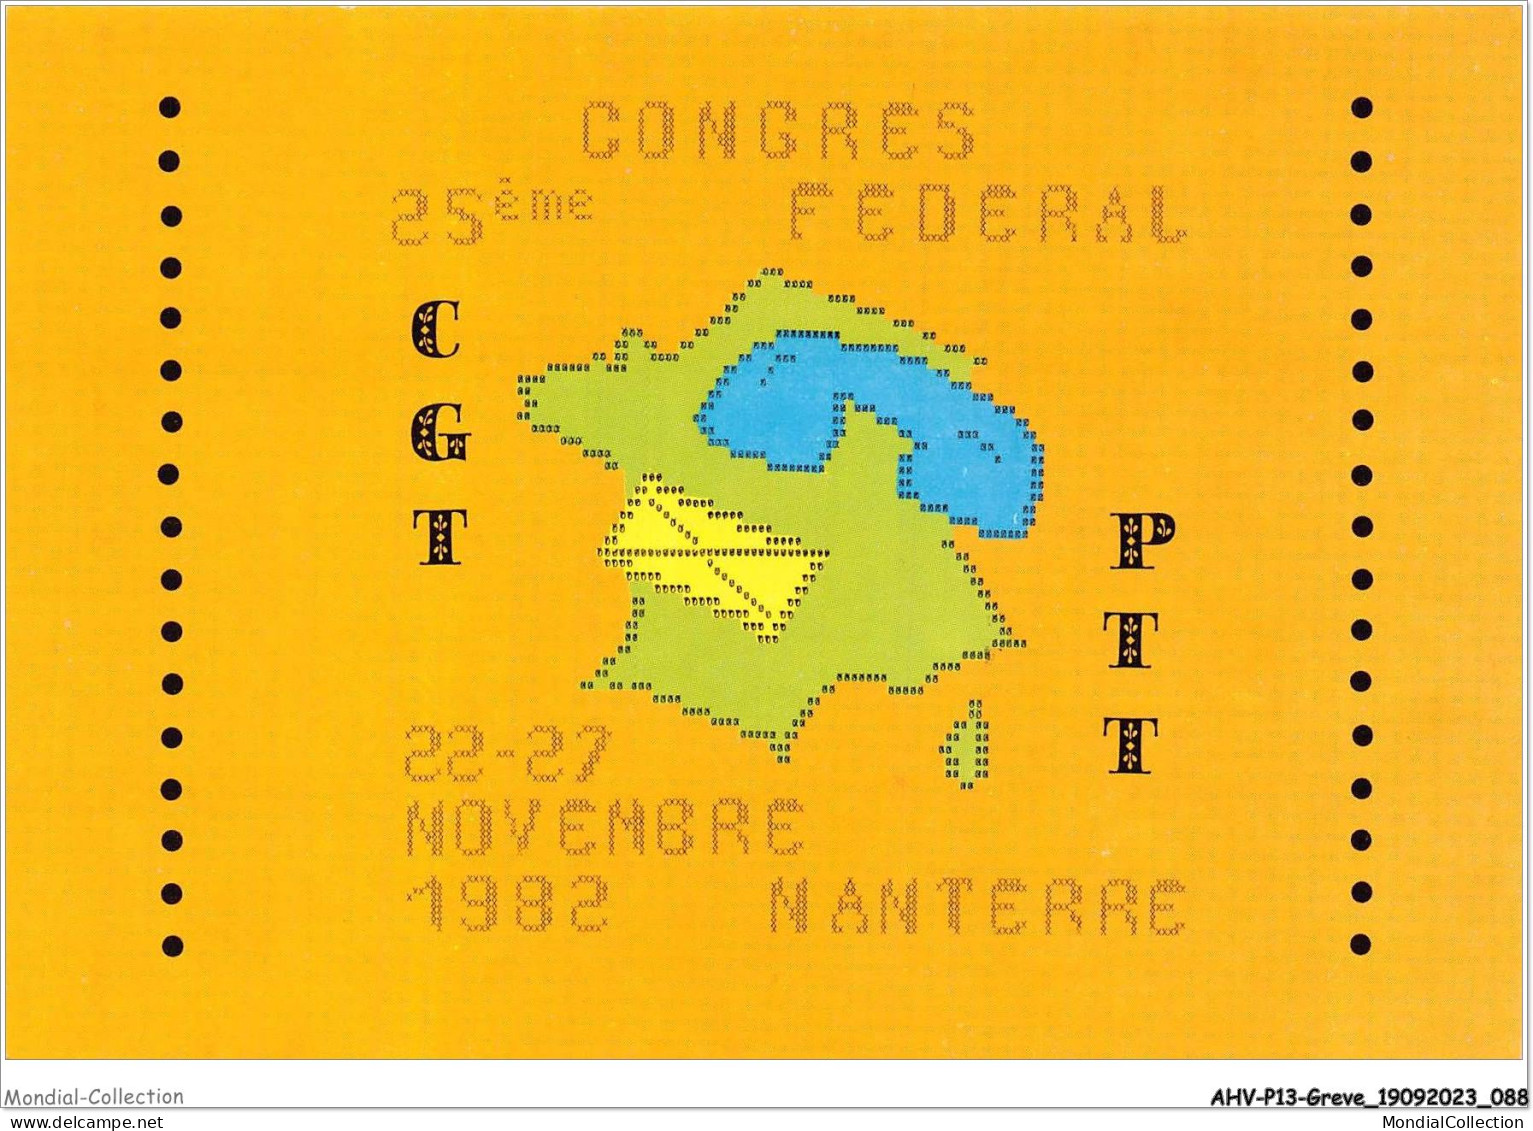 AHVP13-1158 - GREVE - CGT PTT 25è Congrès Féderal  Nanterre - 22 - 27 Novembre - Streiks